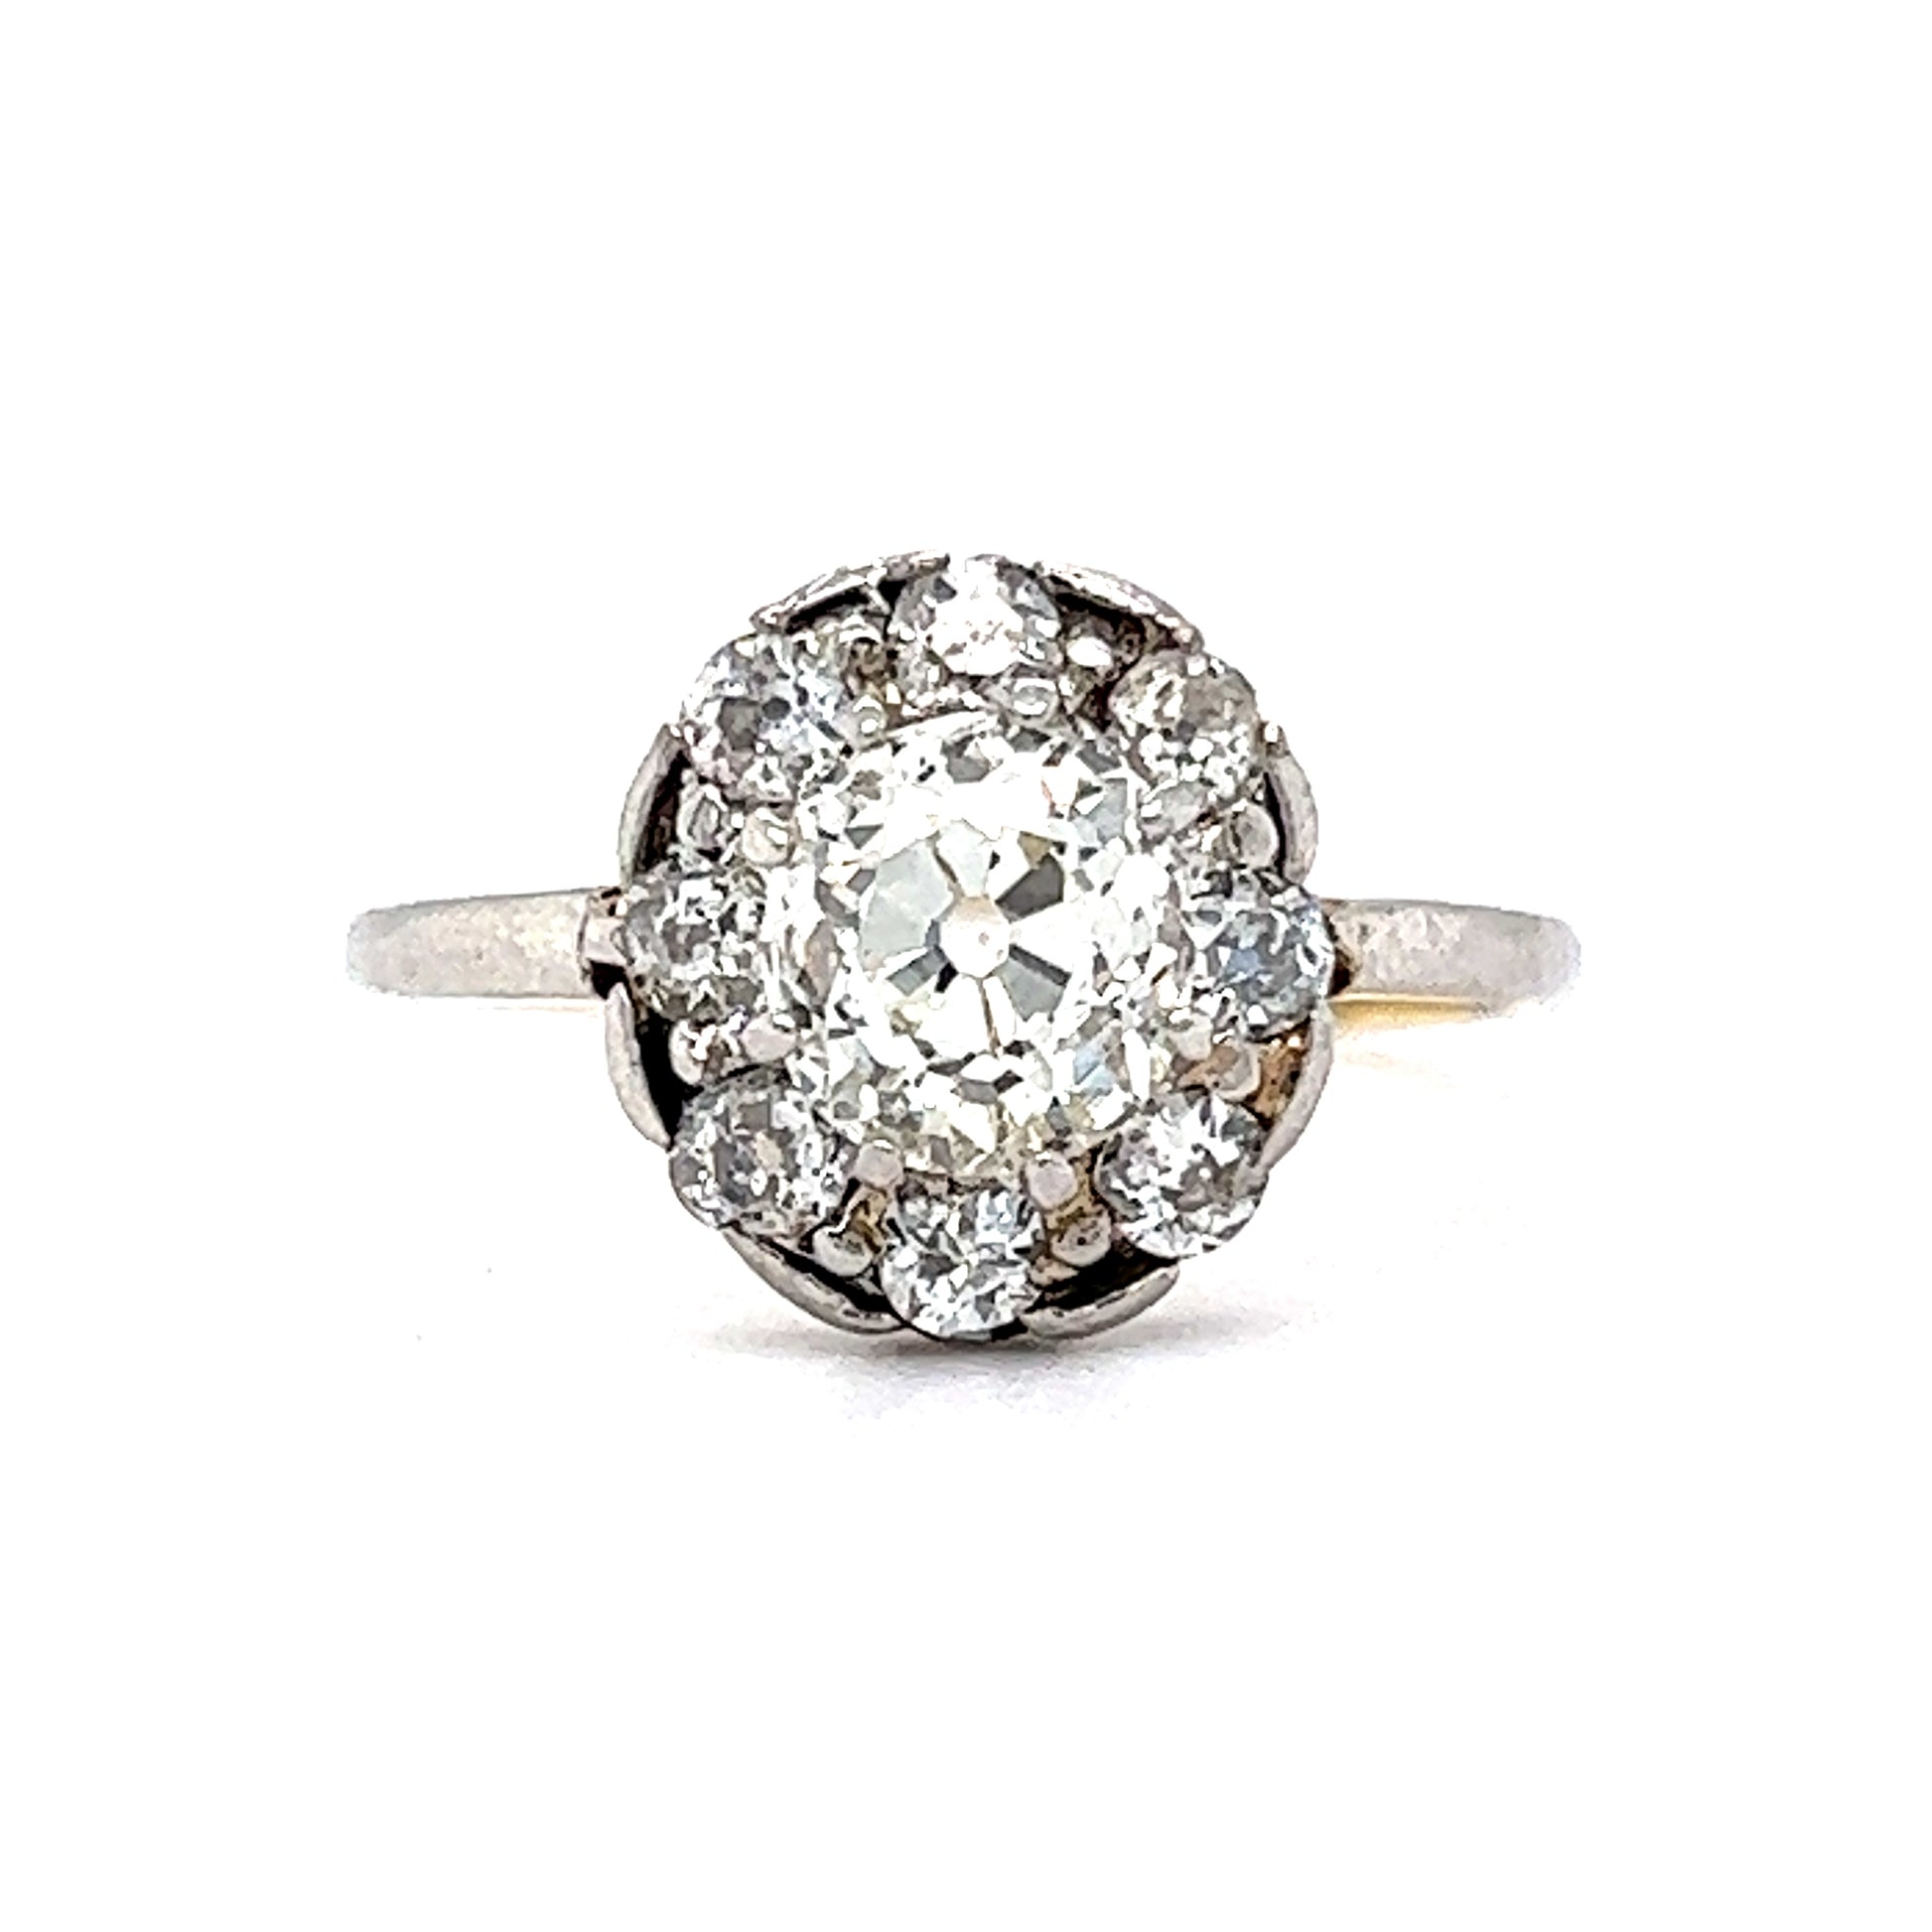 .93 Victorian Diamond Halo Engagement Ring in Platinum & 18kComposition: Platinum/18 Karat Yellow Gold Ring Size: 5 Total Diamond Weight: 1.33ct Total Gram Weight: 3.0 g